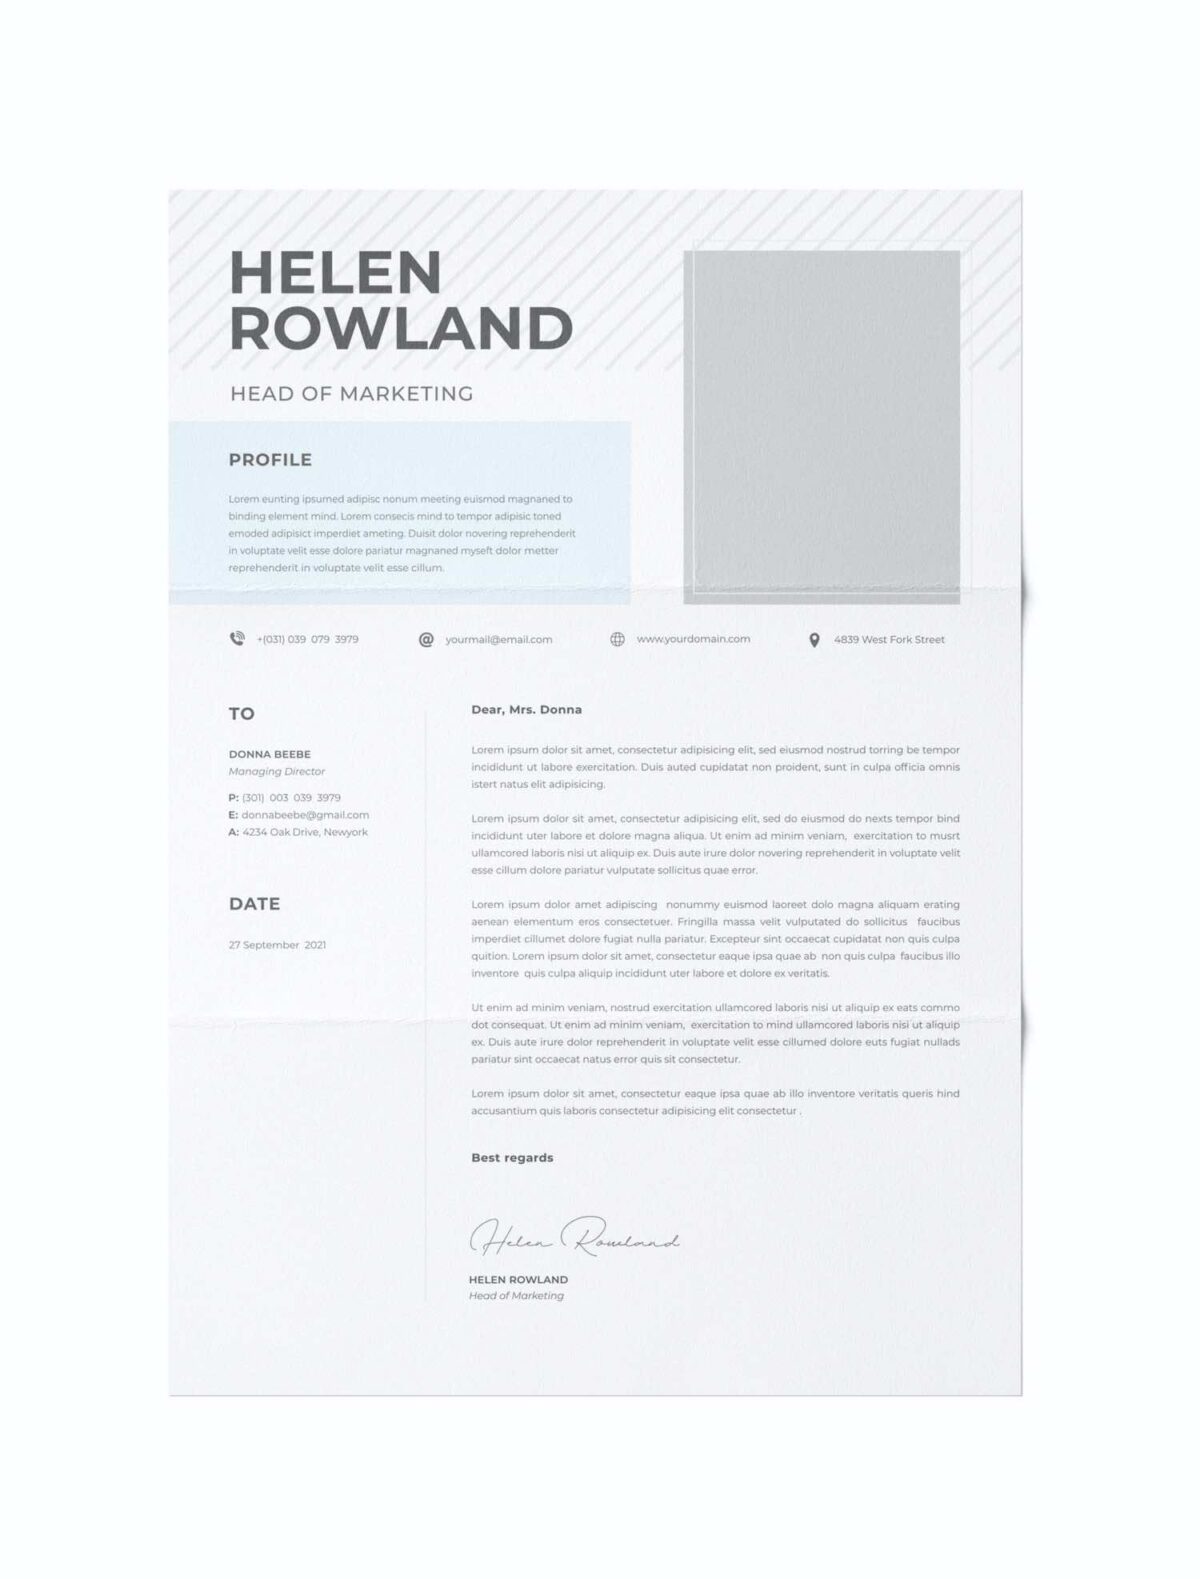 CV #30 Helen Rowland